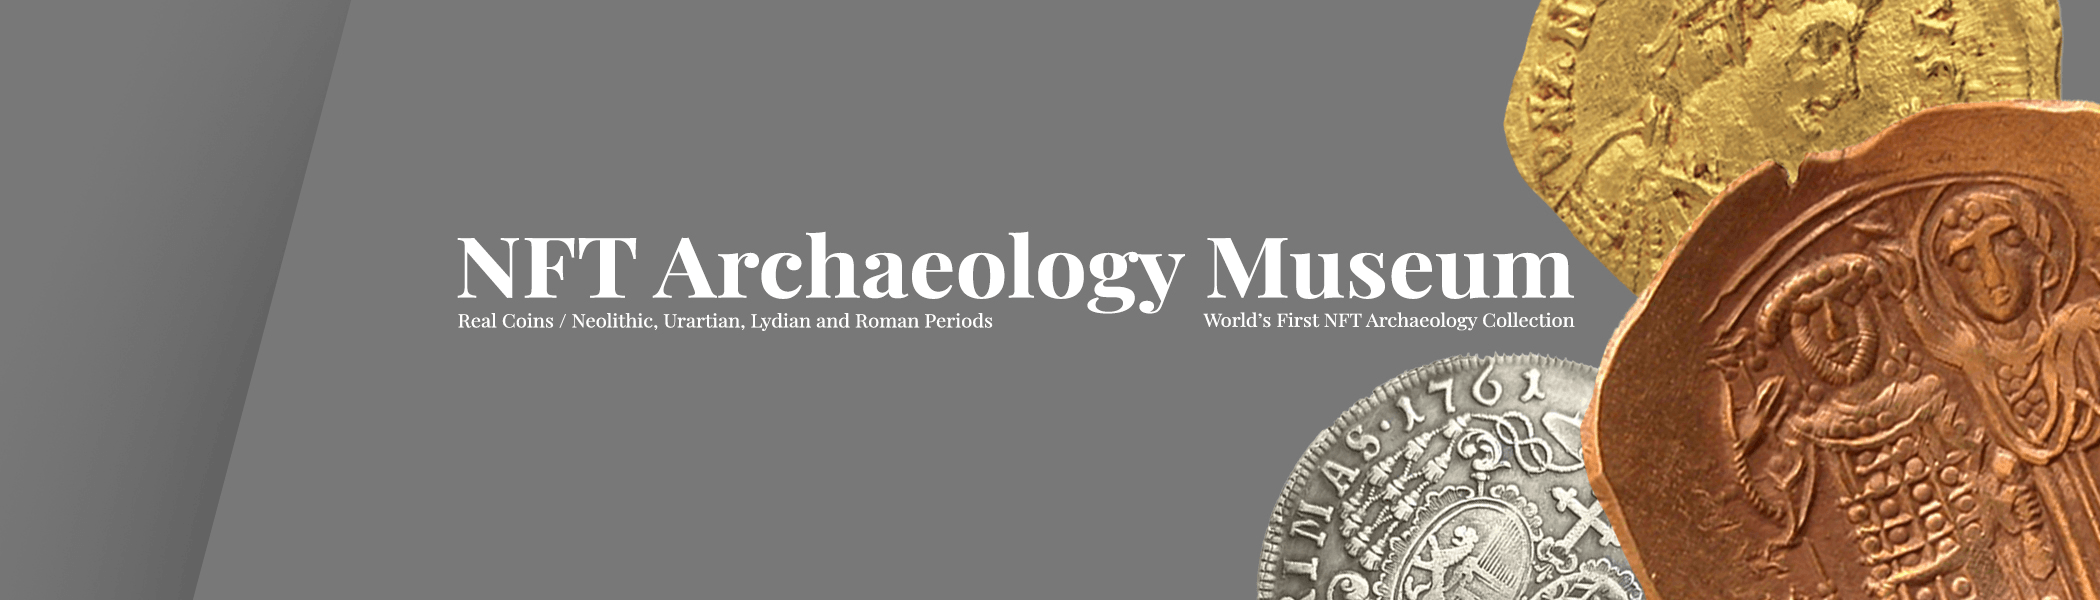 NFTArchaeologyMuseum banner